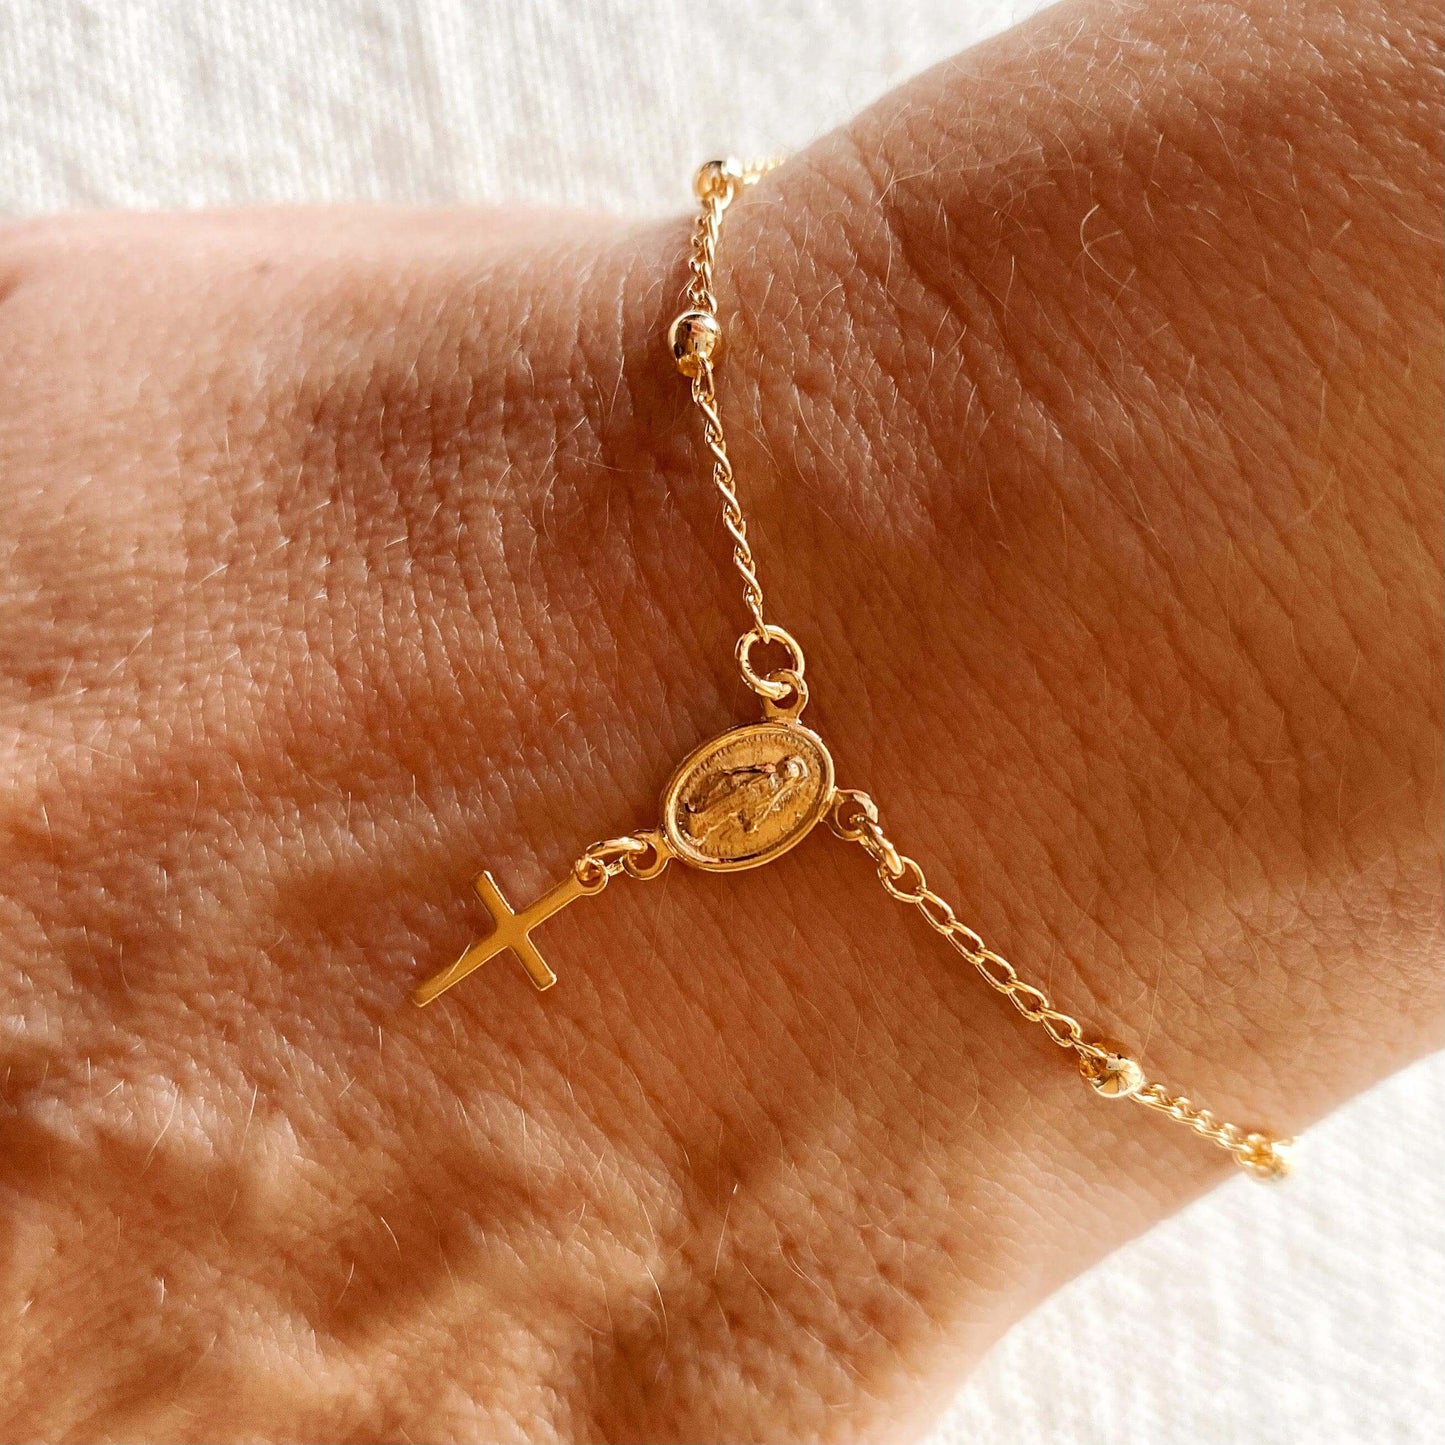 GoldFi 18k Gold Filled Delicate Rosary Bracelet